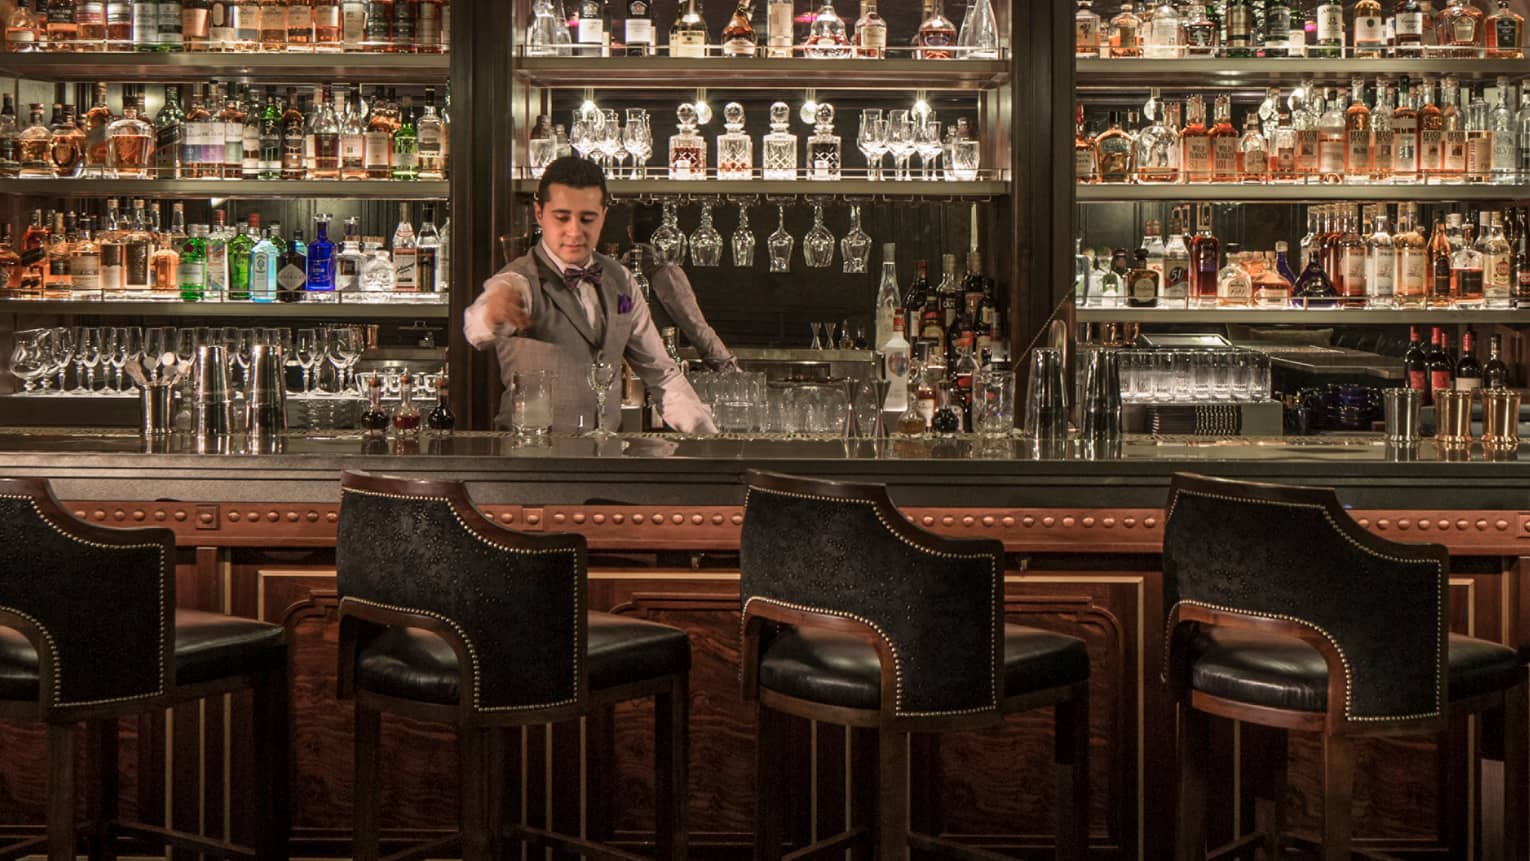 SIRR bartender in vest stands behind bar stirring cocktail, glasses and bottles lining wall behind him